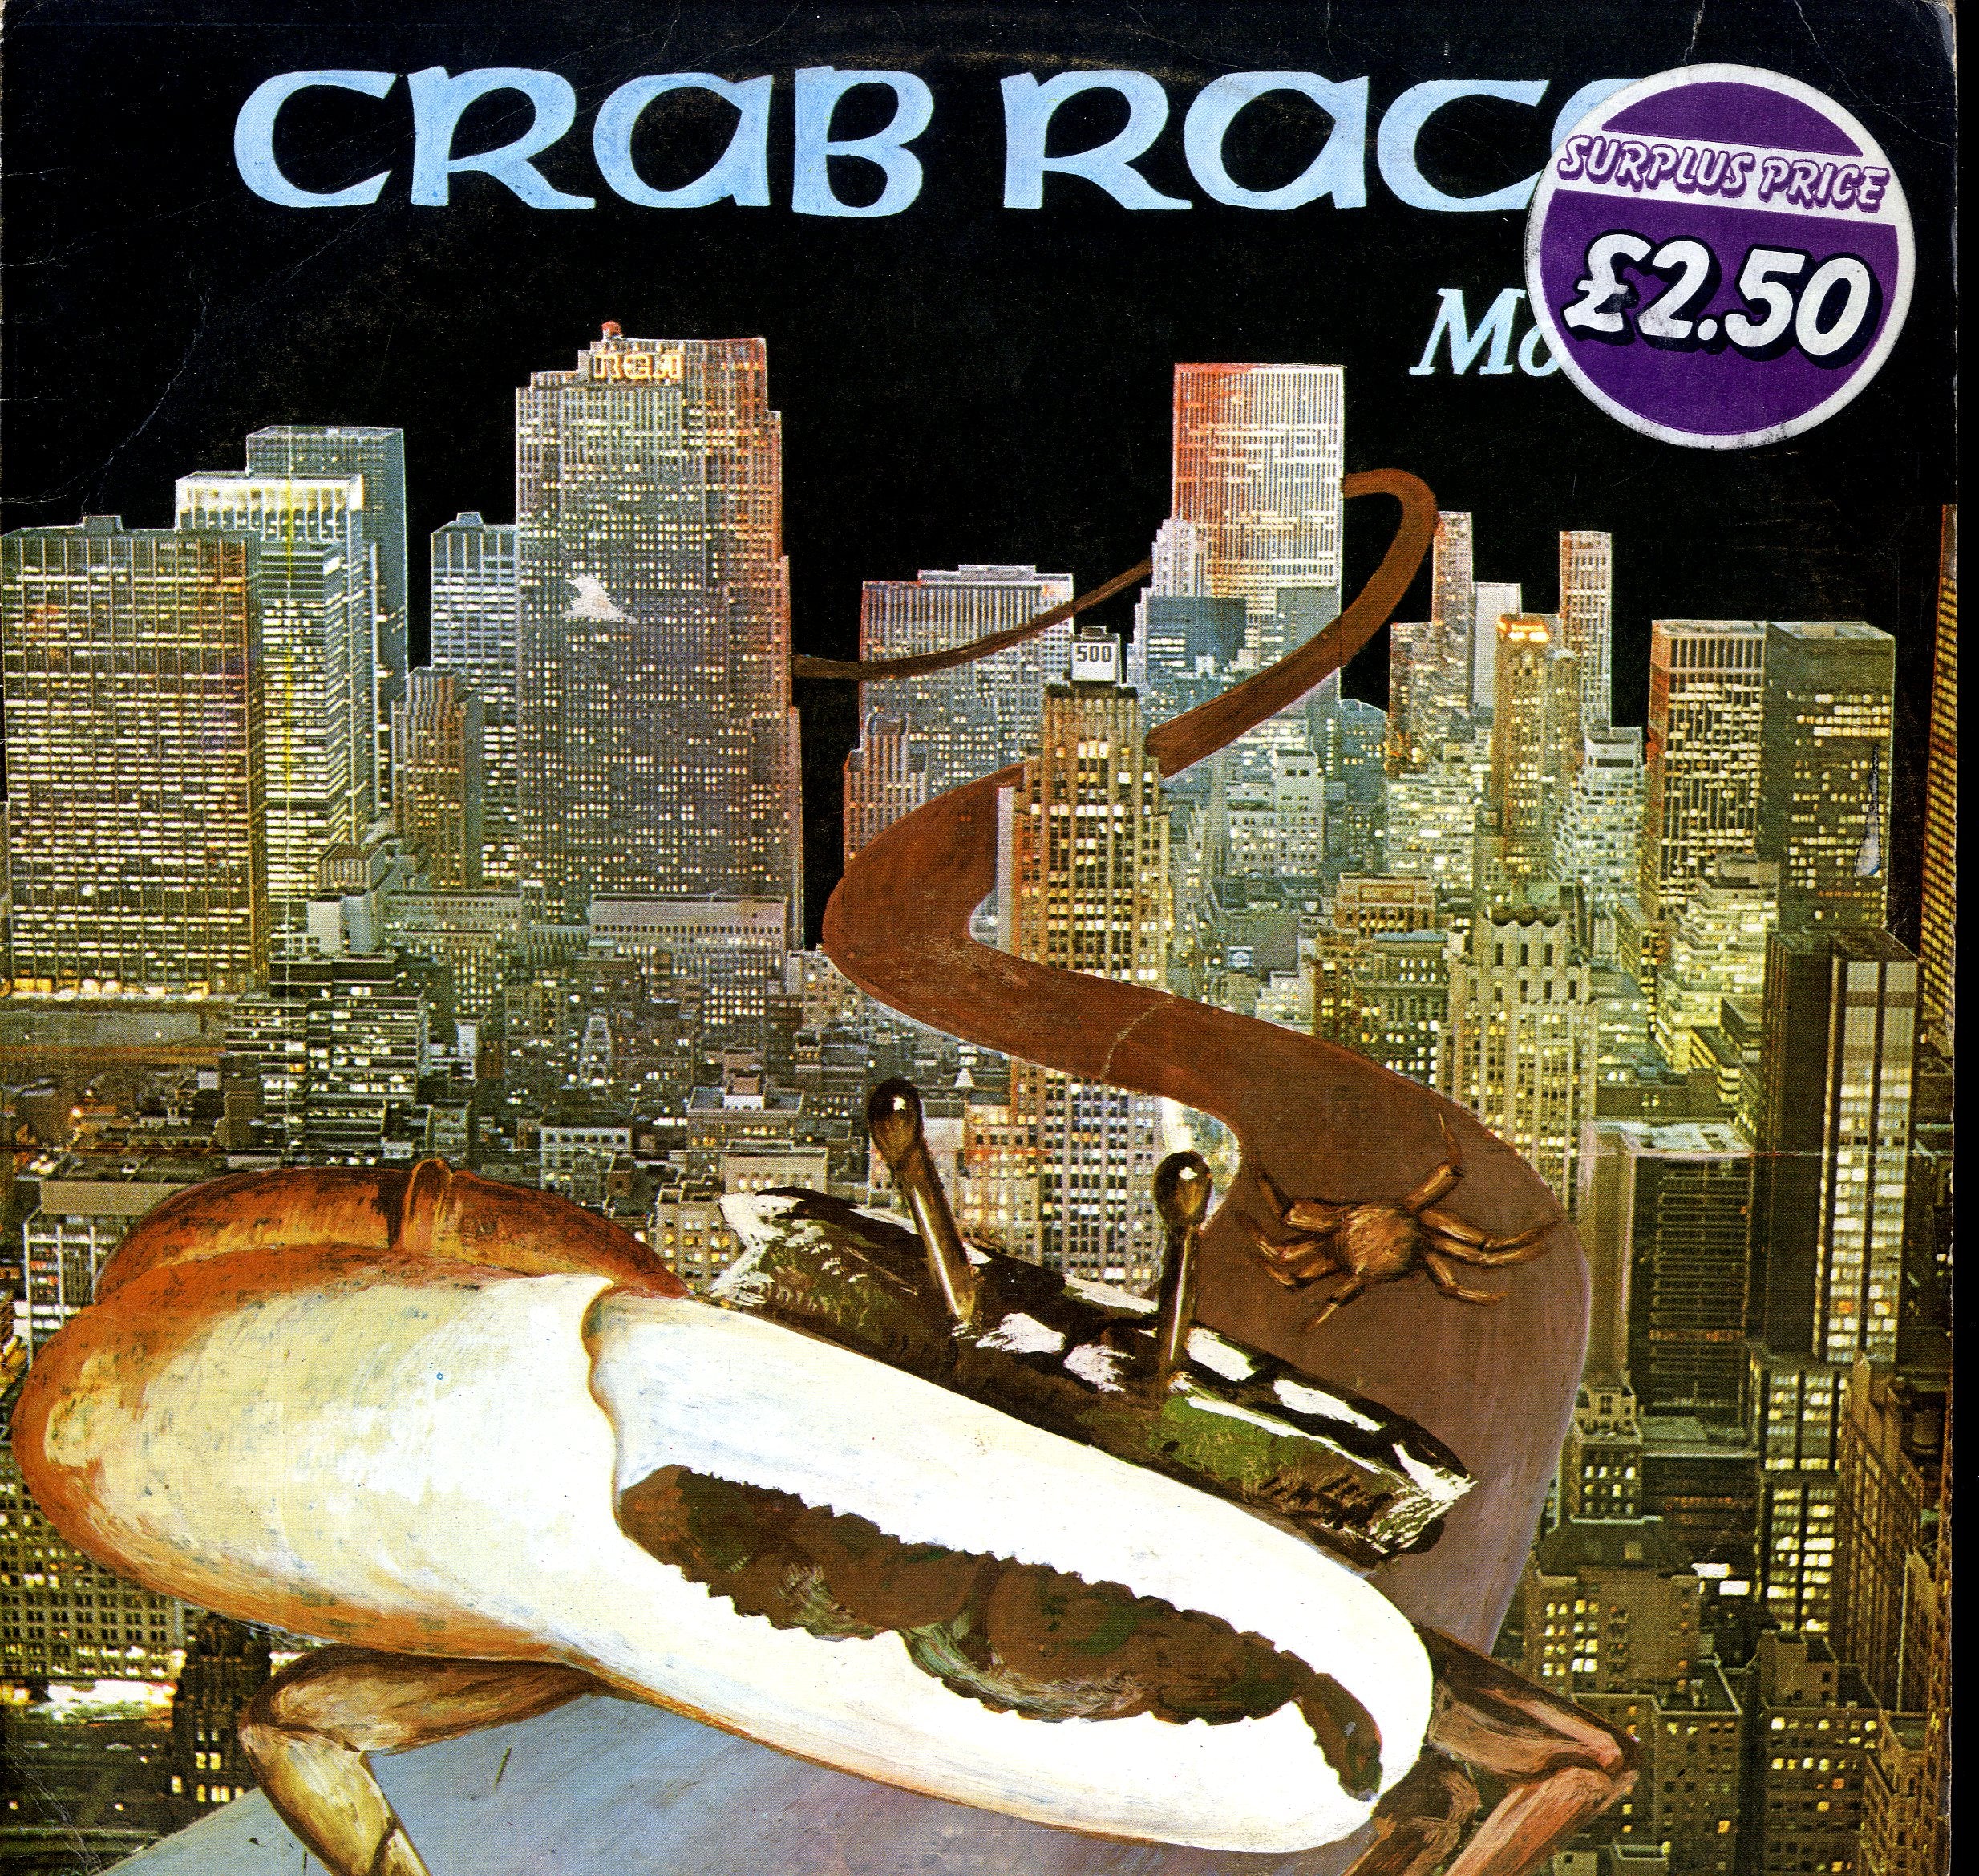 MORWELLS [Crab Race]